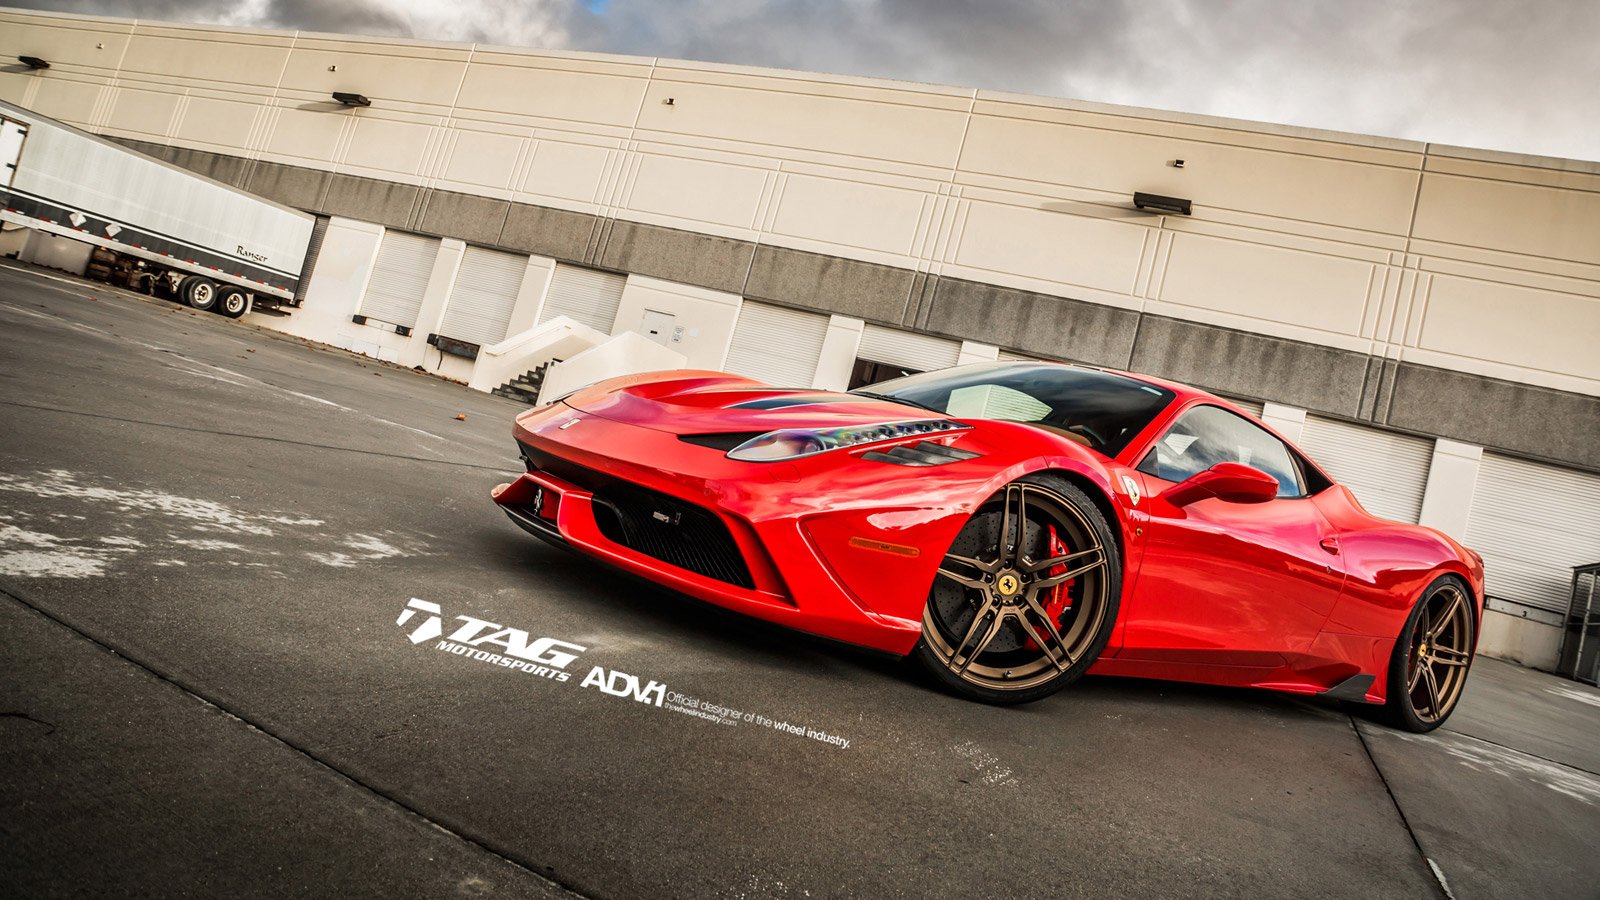 2014, Adv1, Ferrari, 458, Speciale, Supercars, Wheels Wallpaper